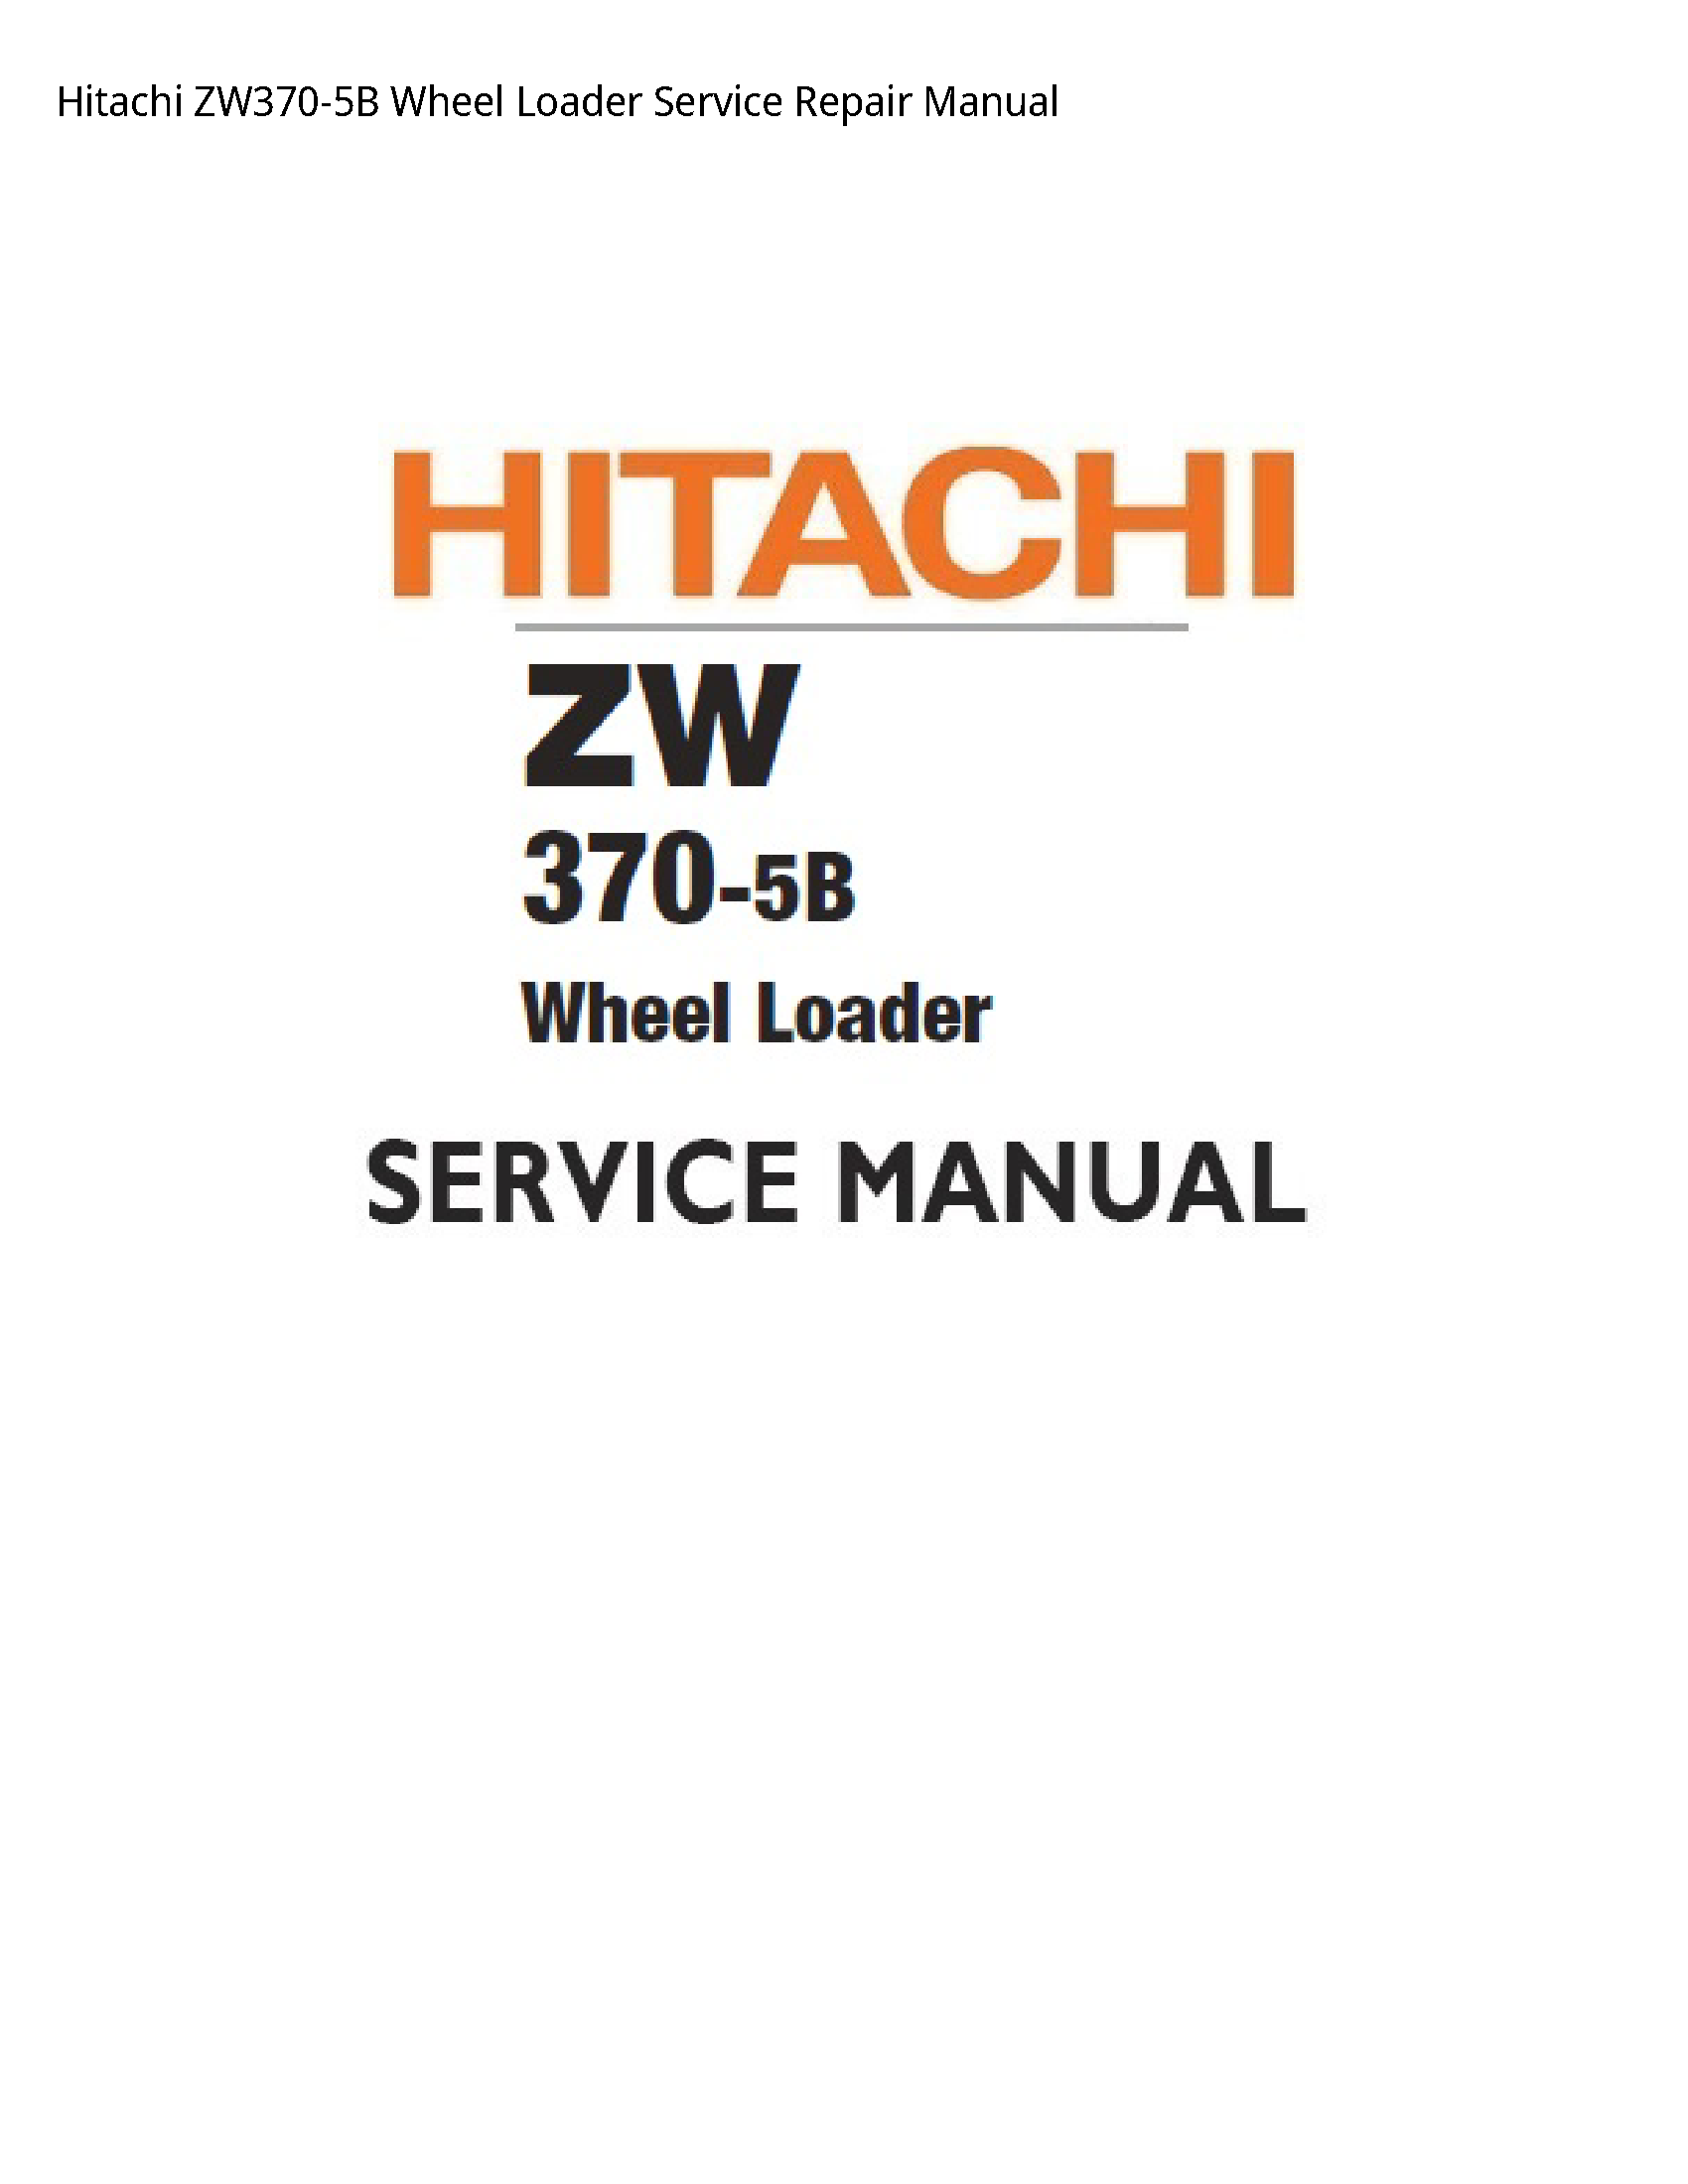 Hitachi ZW370-5B Wheel Loader manual